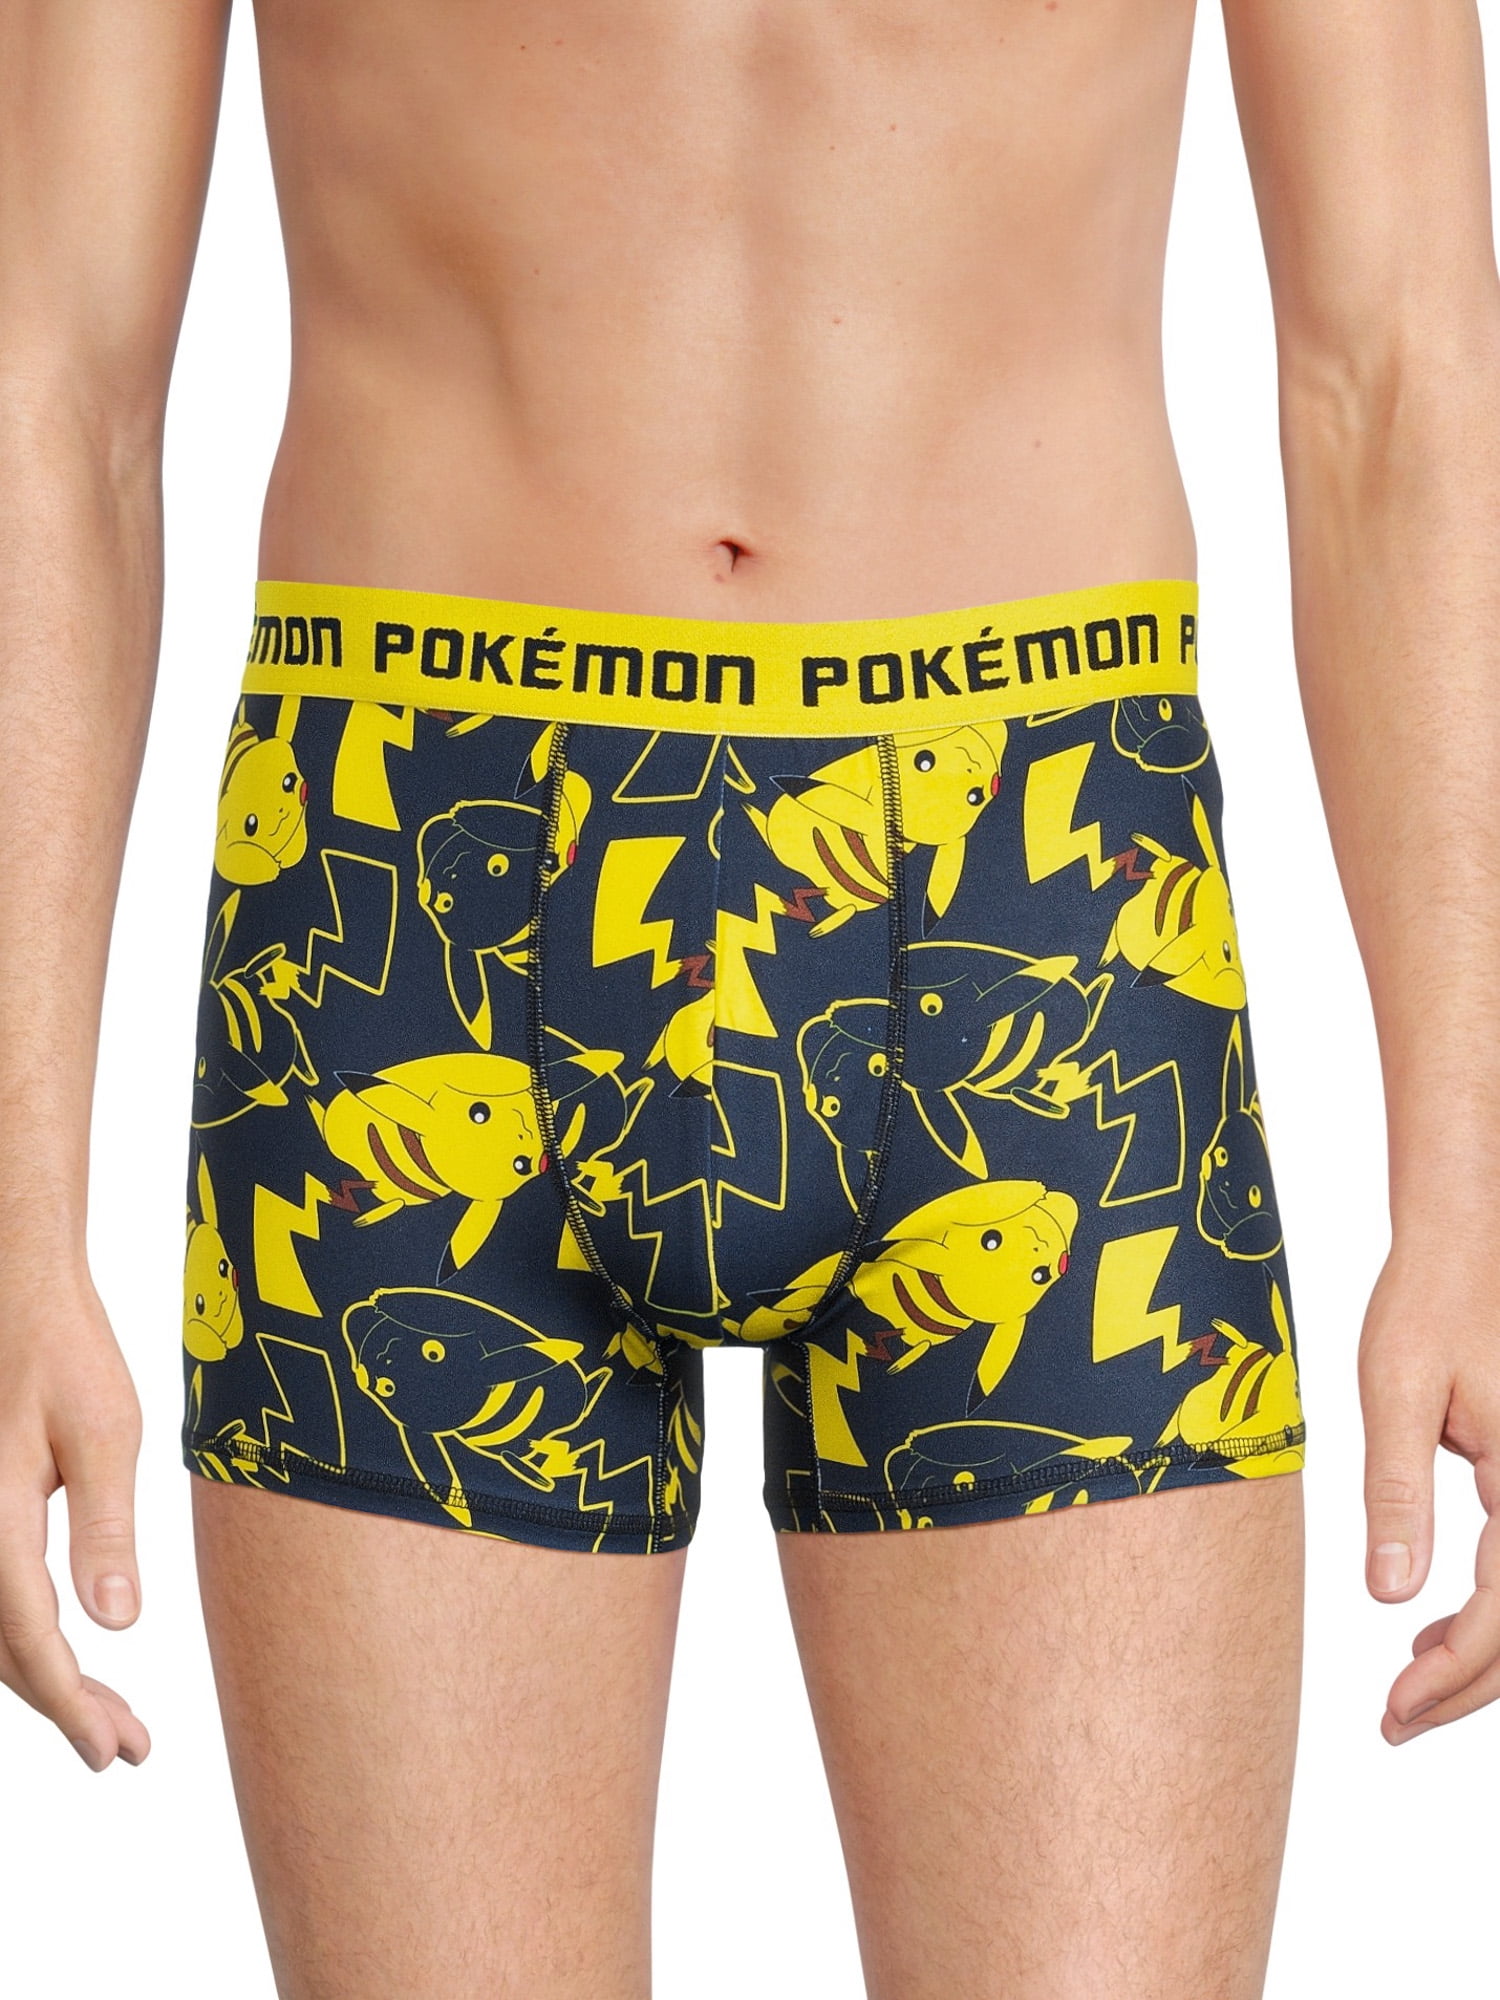 Pokemon Men's Boxer Briefs, 2-Pack, Sizes S-2XL